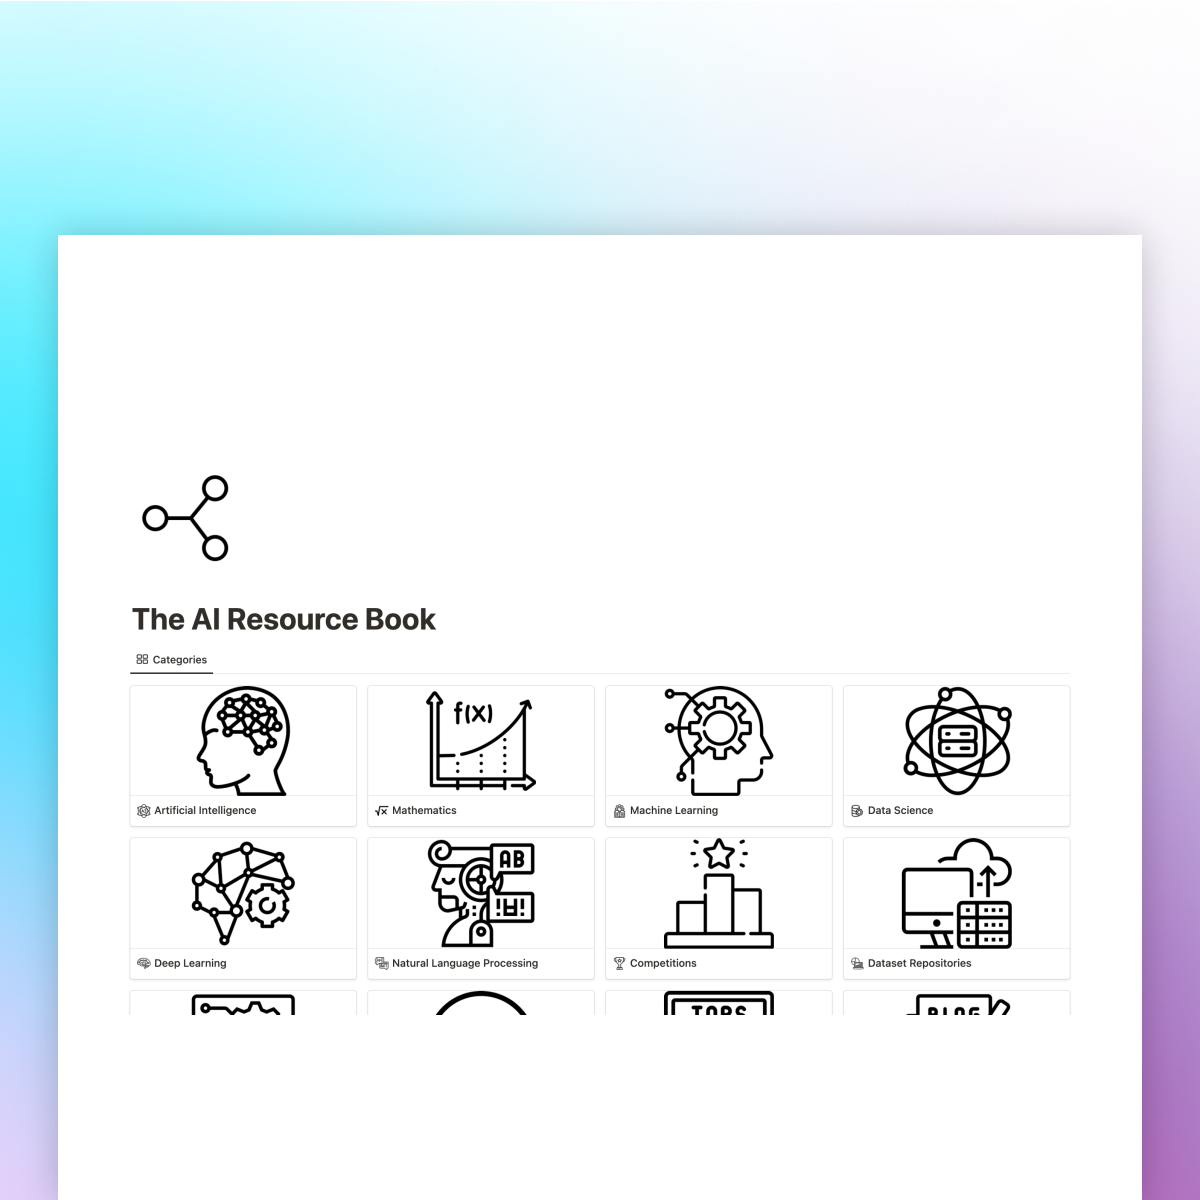 The AI Resource Book thumbnail image